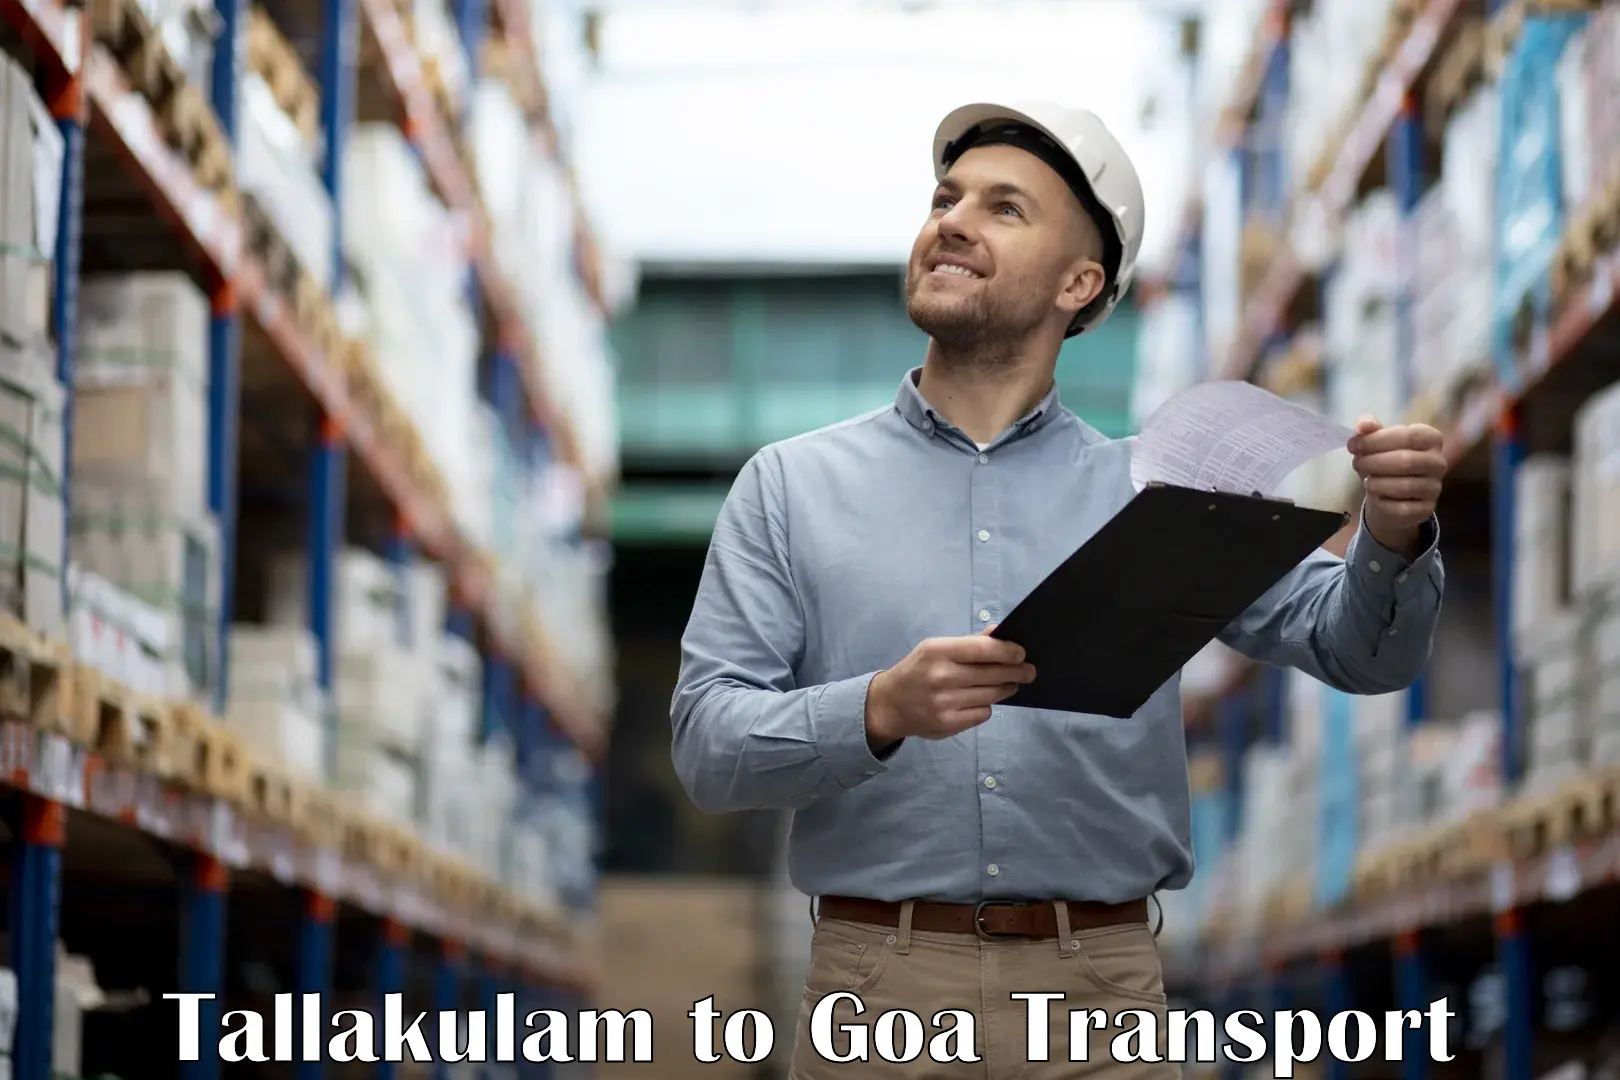 Delivery service Tallakulam to Goa